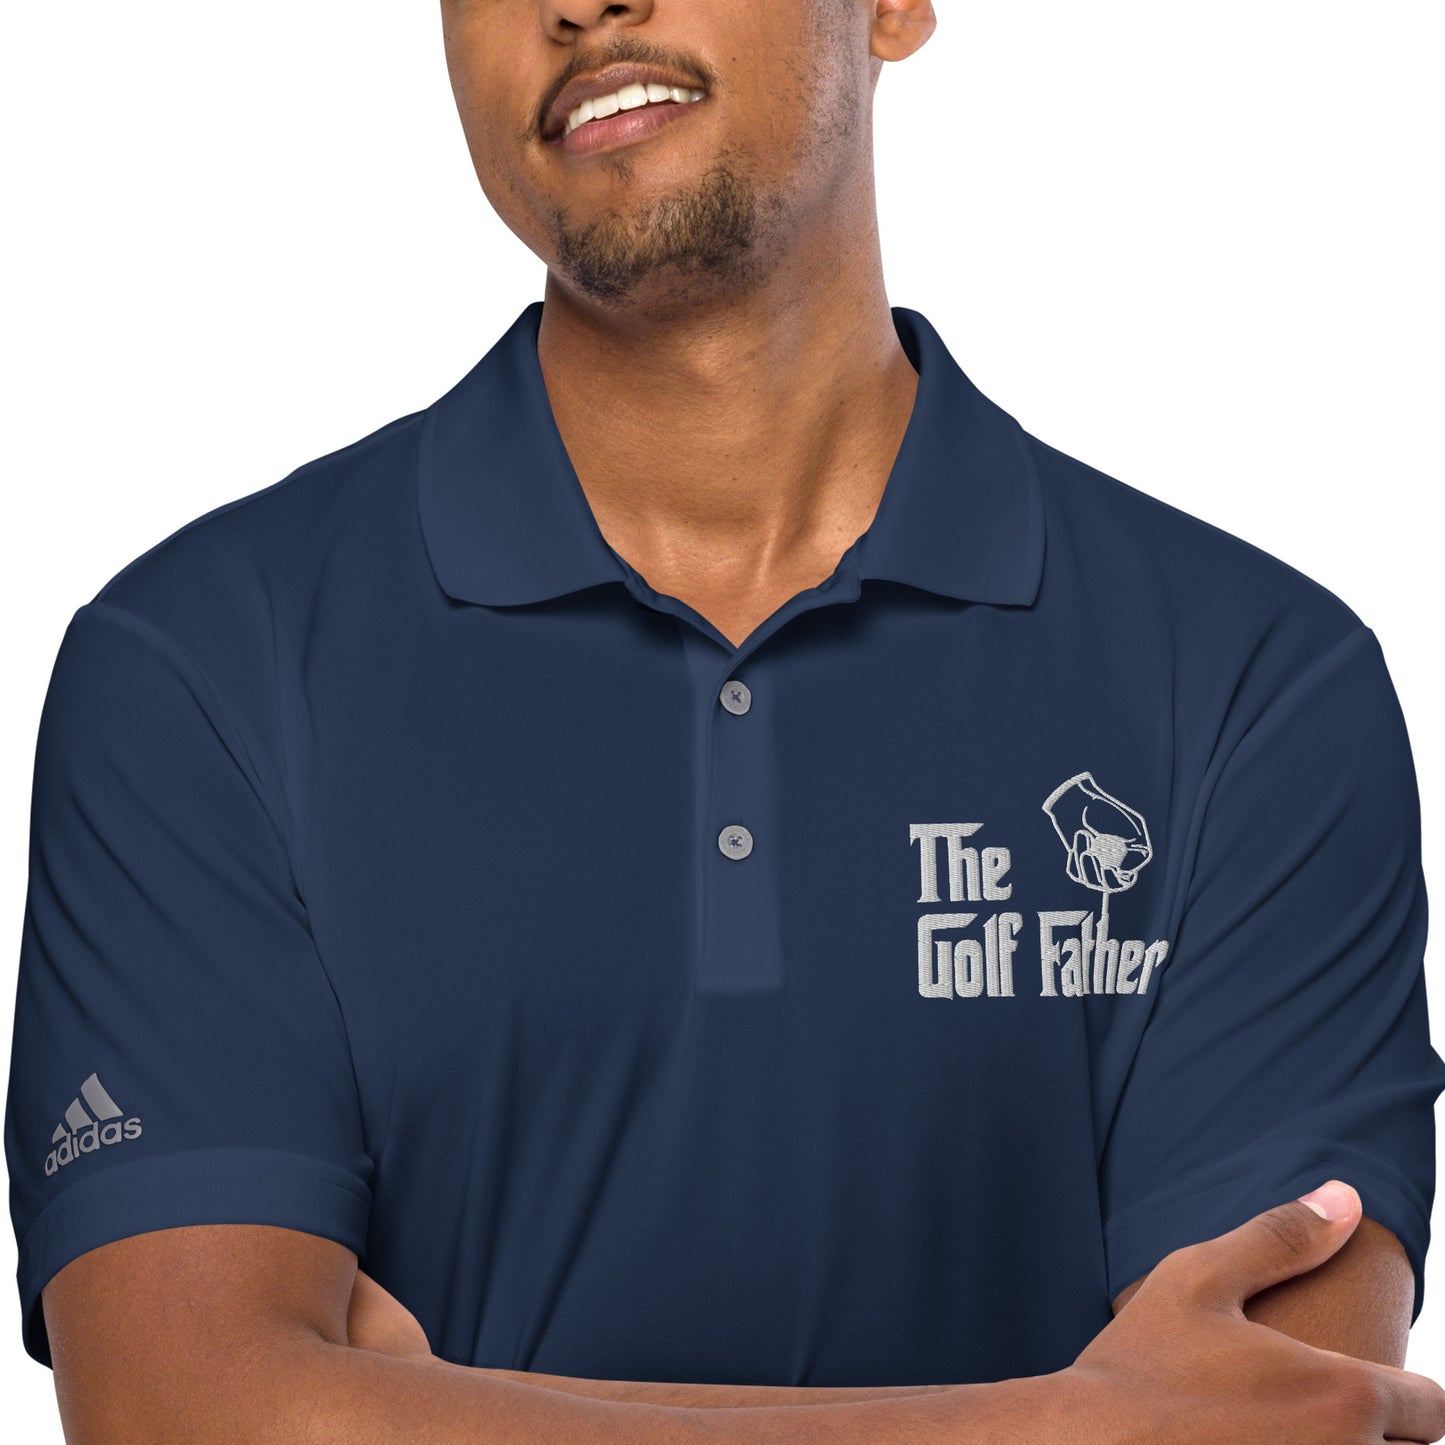 Adidas 'The Golf Father' Performance Polo Shirt